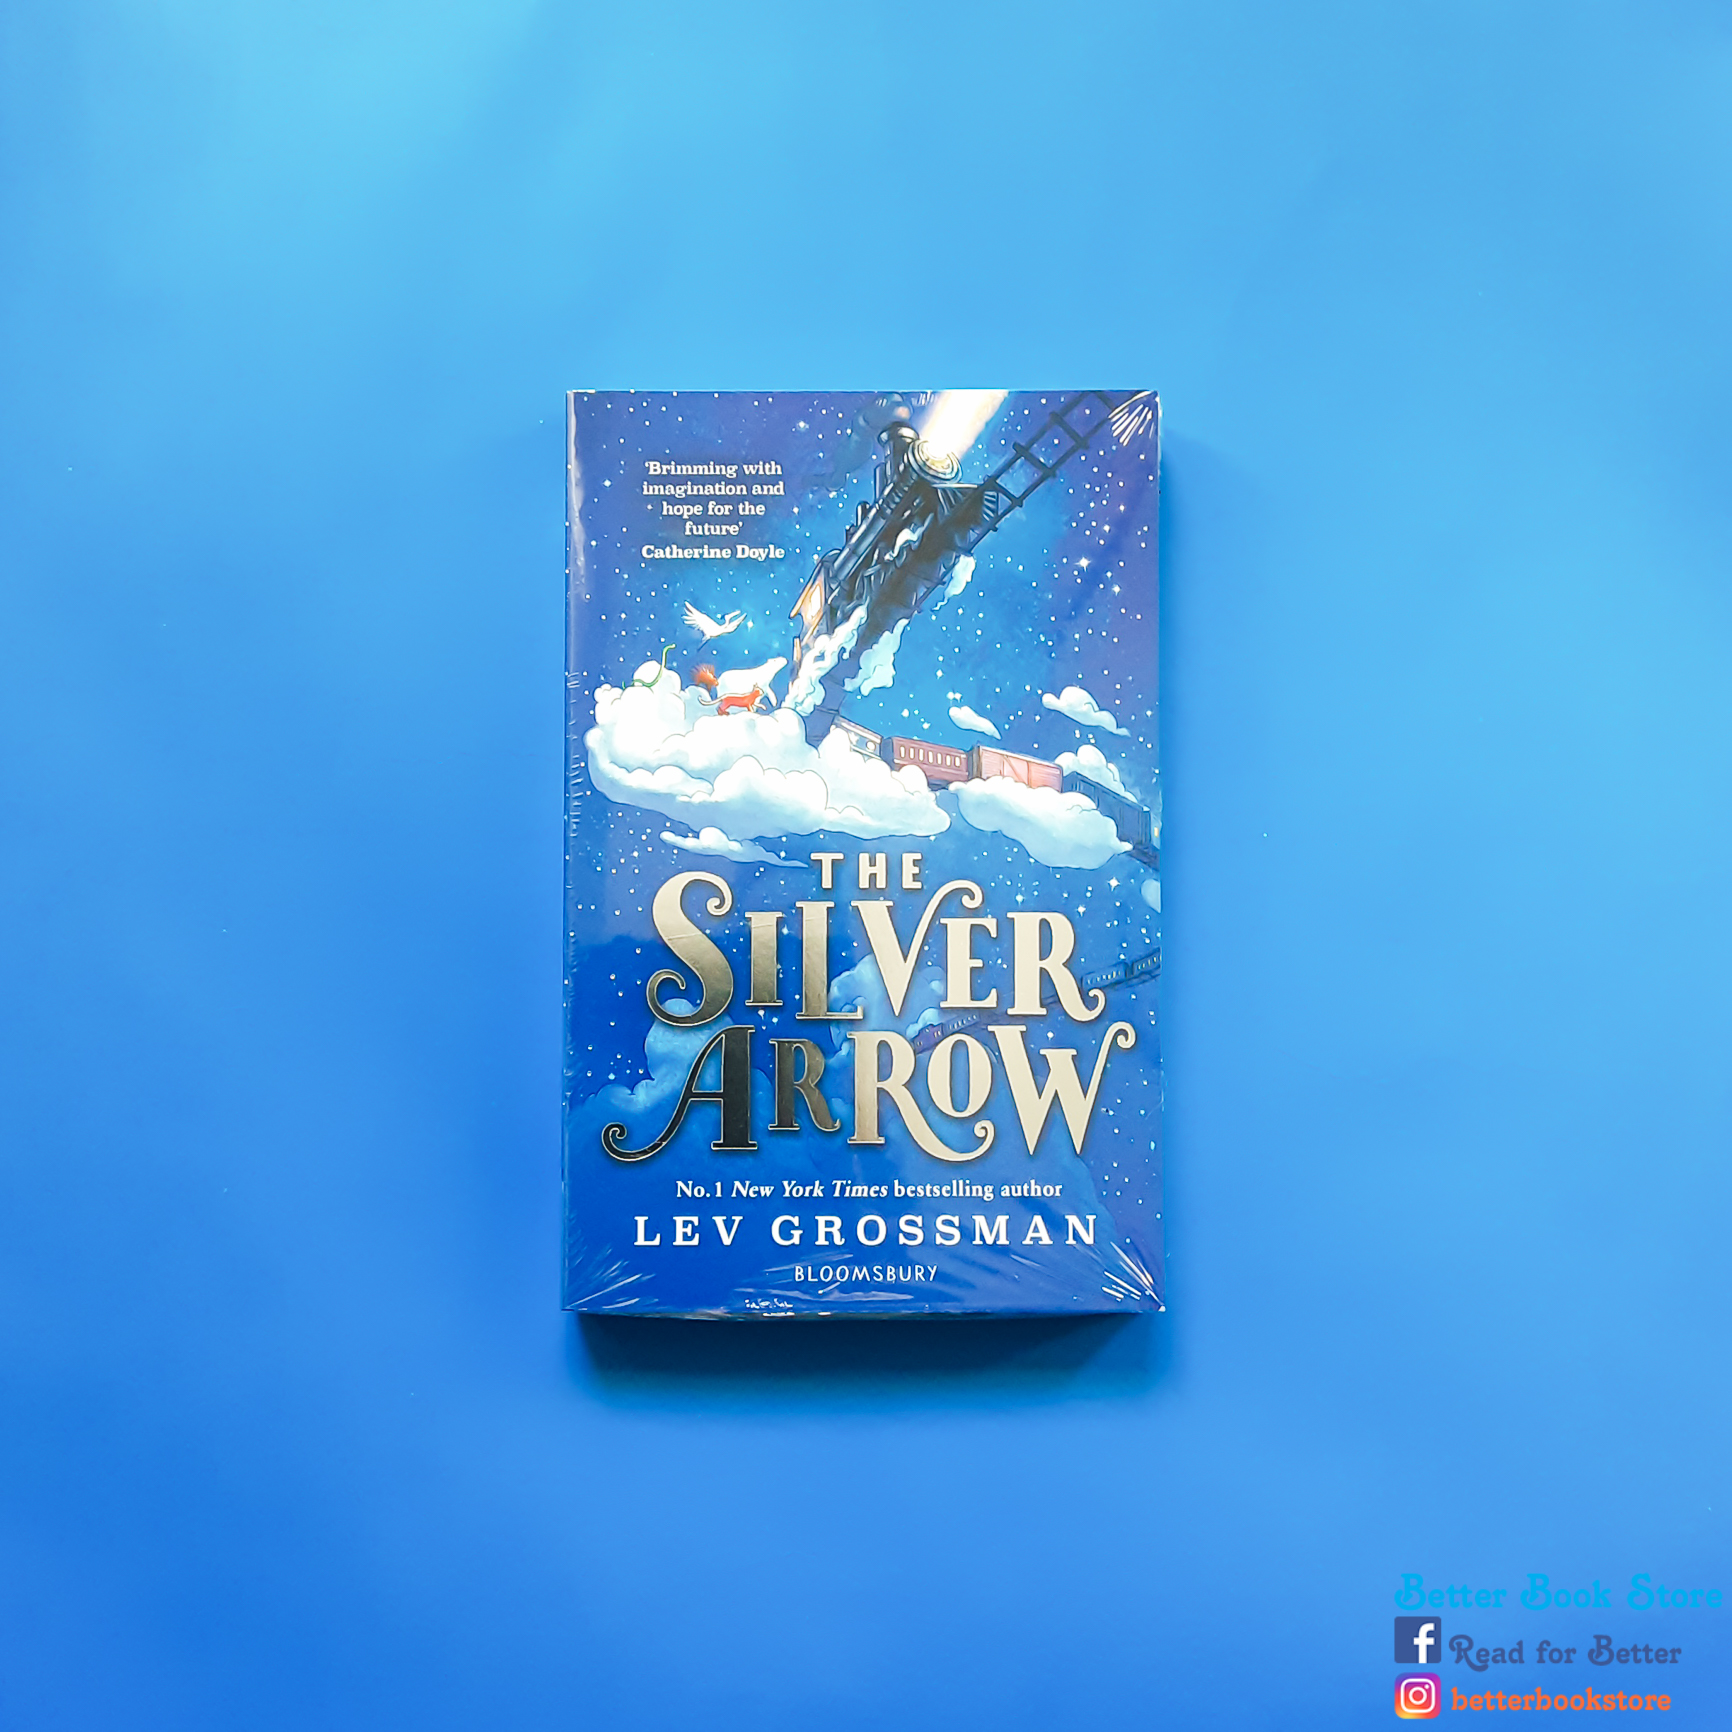 The Silver Arrow 🚂 by Lev Grossman